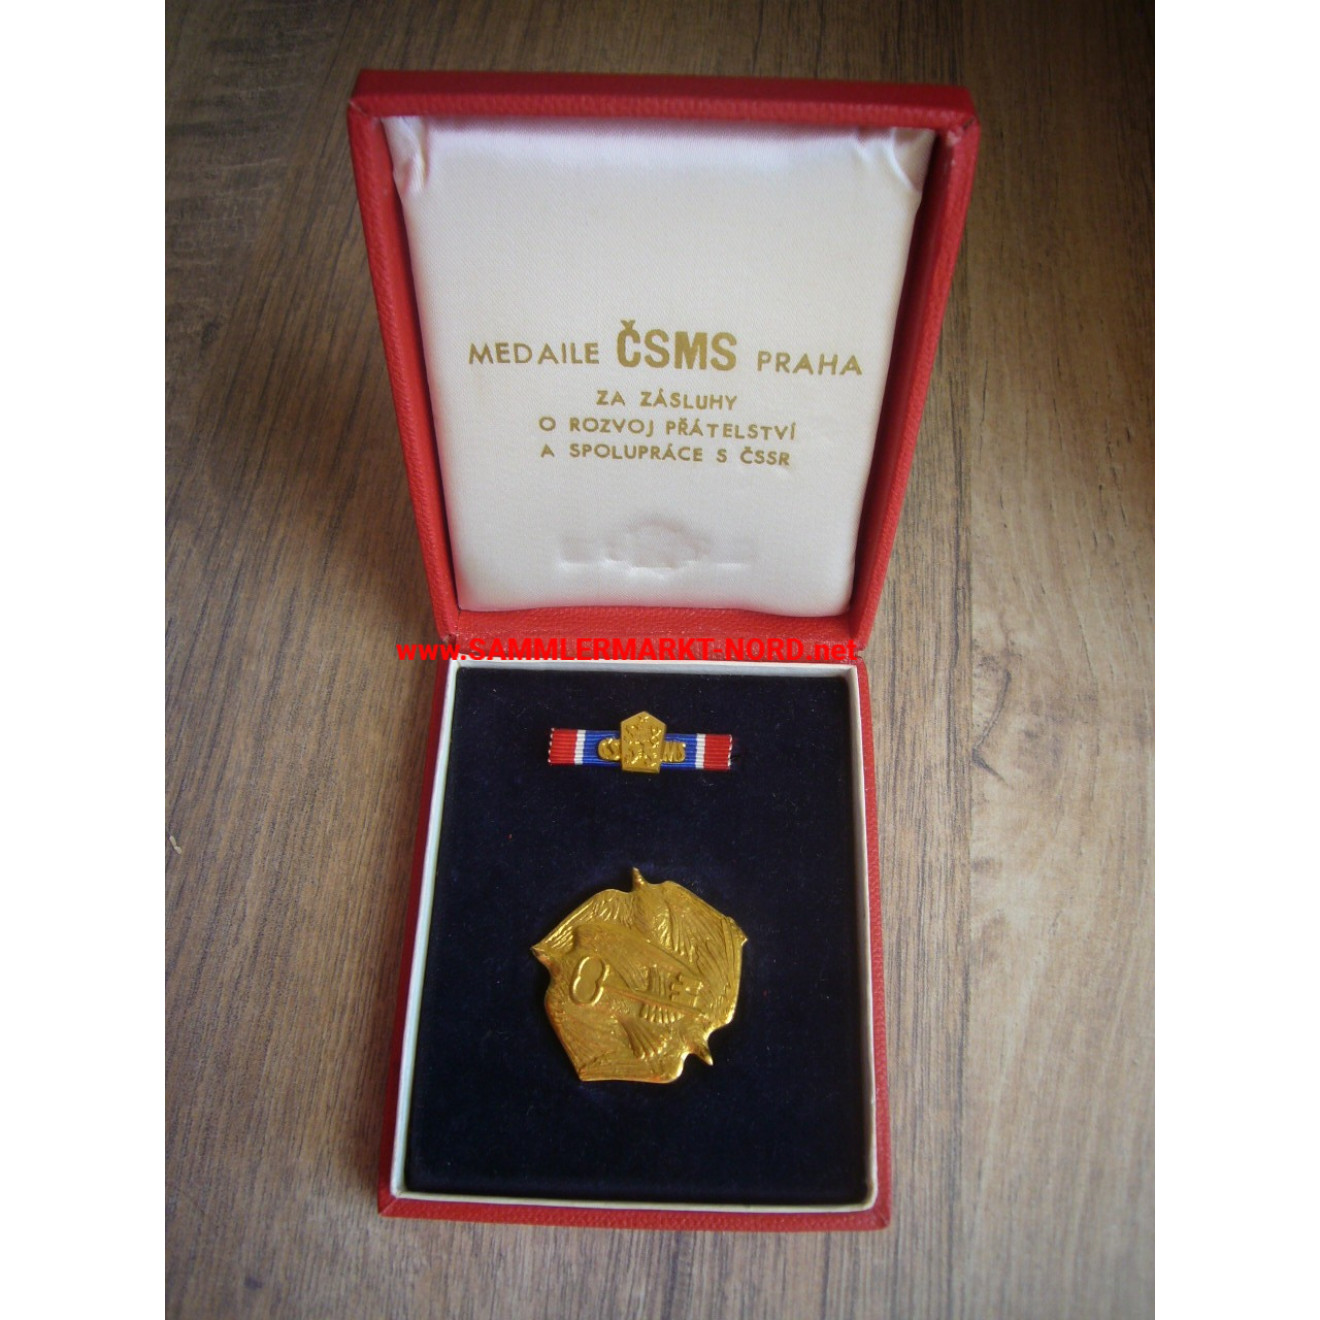 Tschechoslowakei - Medaille CSMS Praha mit Etui